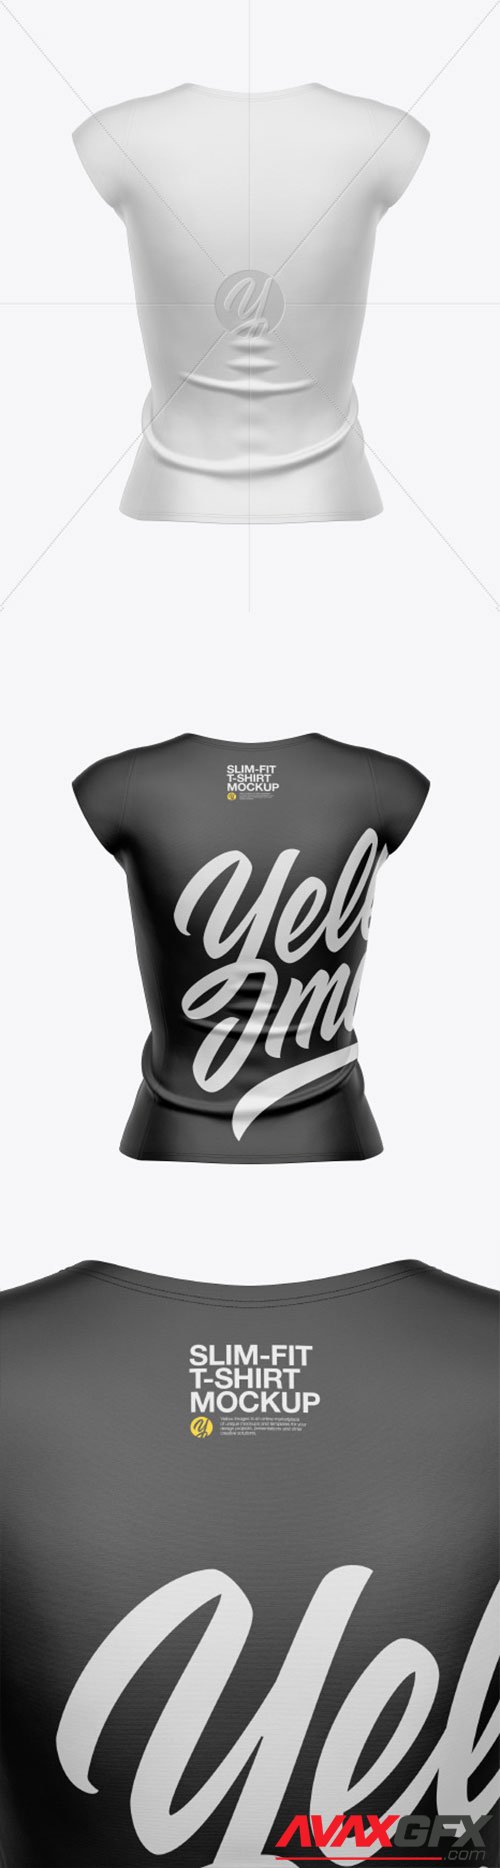 Download Women's Slim-Fit T-Shirt Mockup - Back View 30929 ...